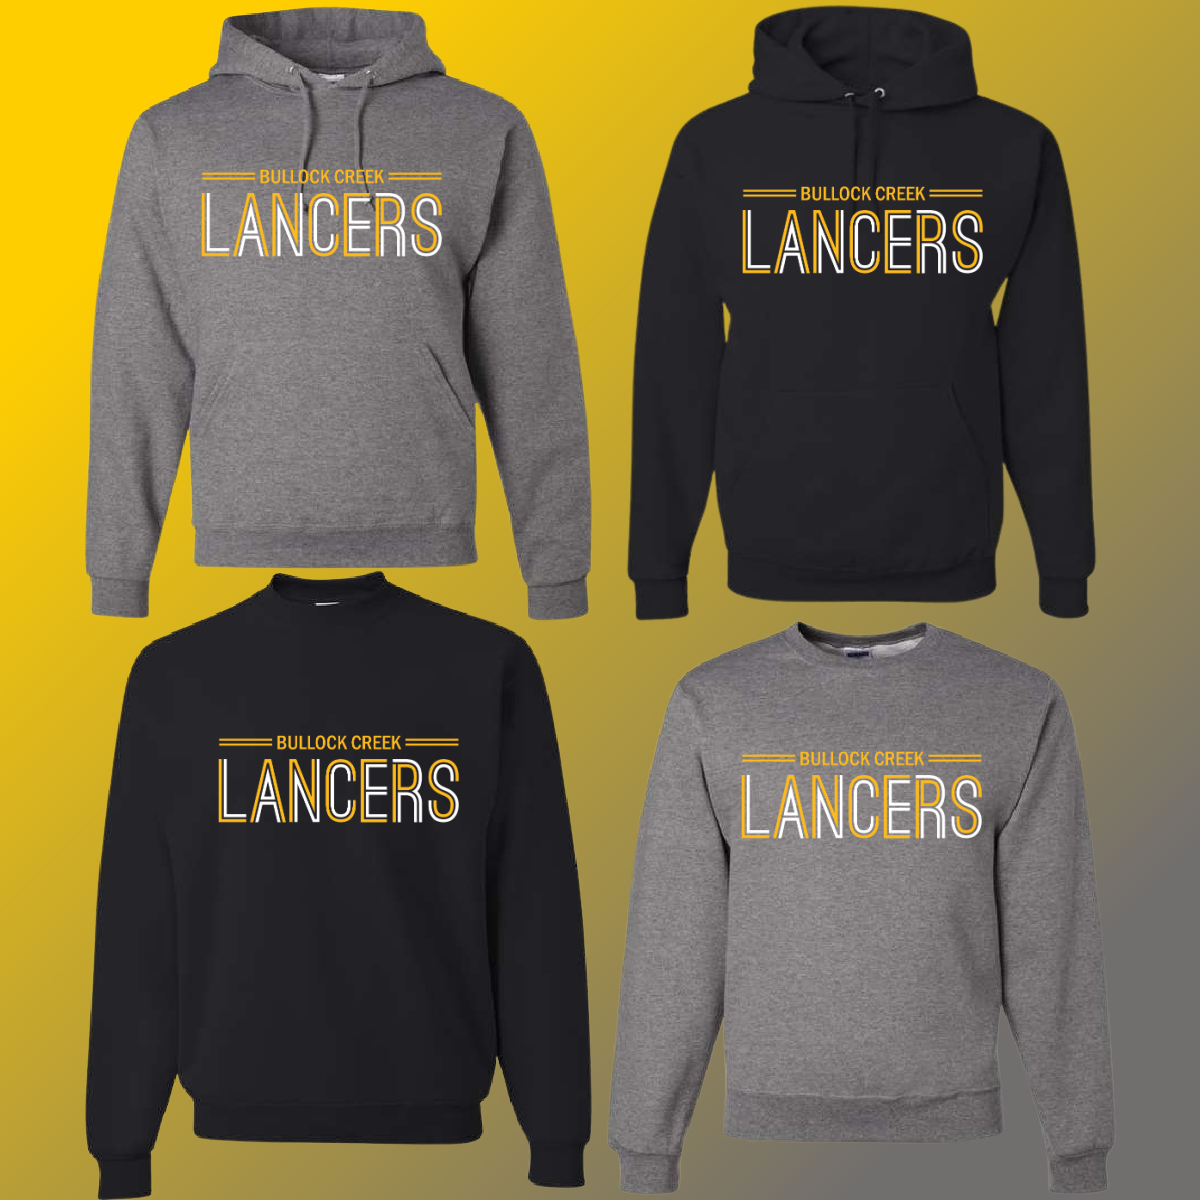 Bullock Creek Lancers  - Double Font Basic Sweatshirt